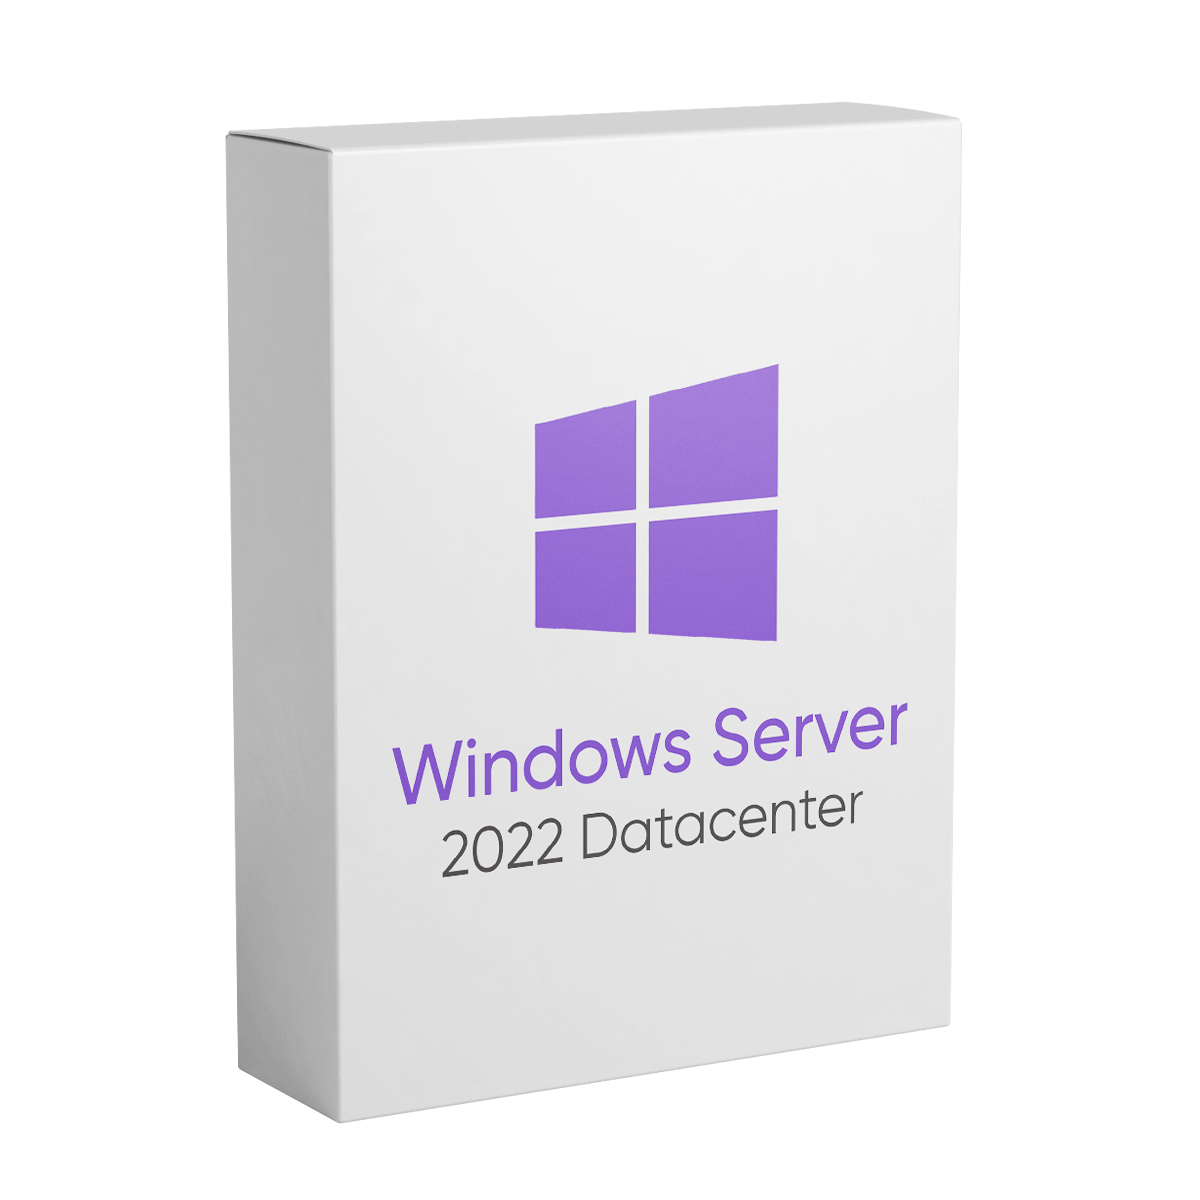 Windows Server 2022 Datacenter - Lifetime License for 1 PC